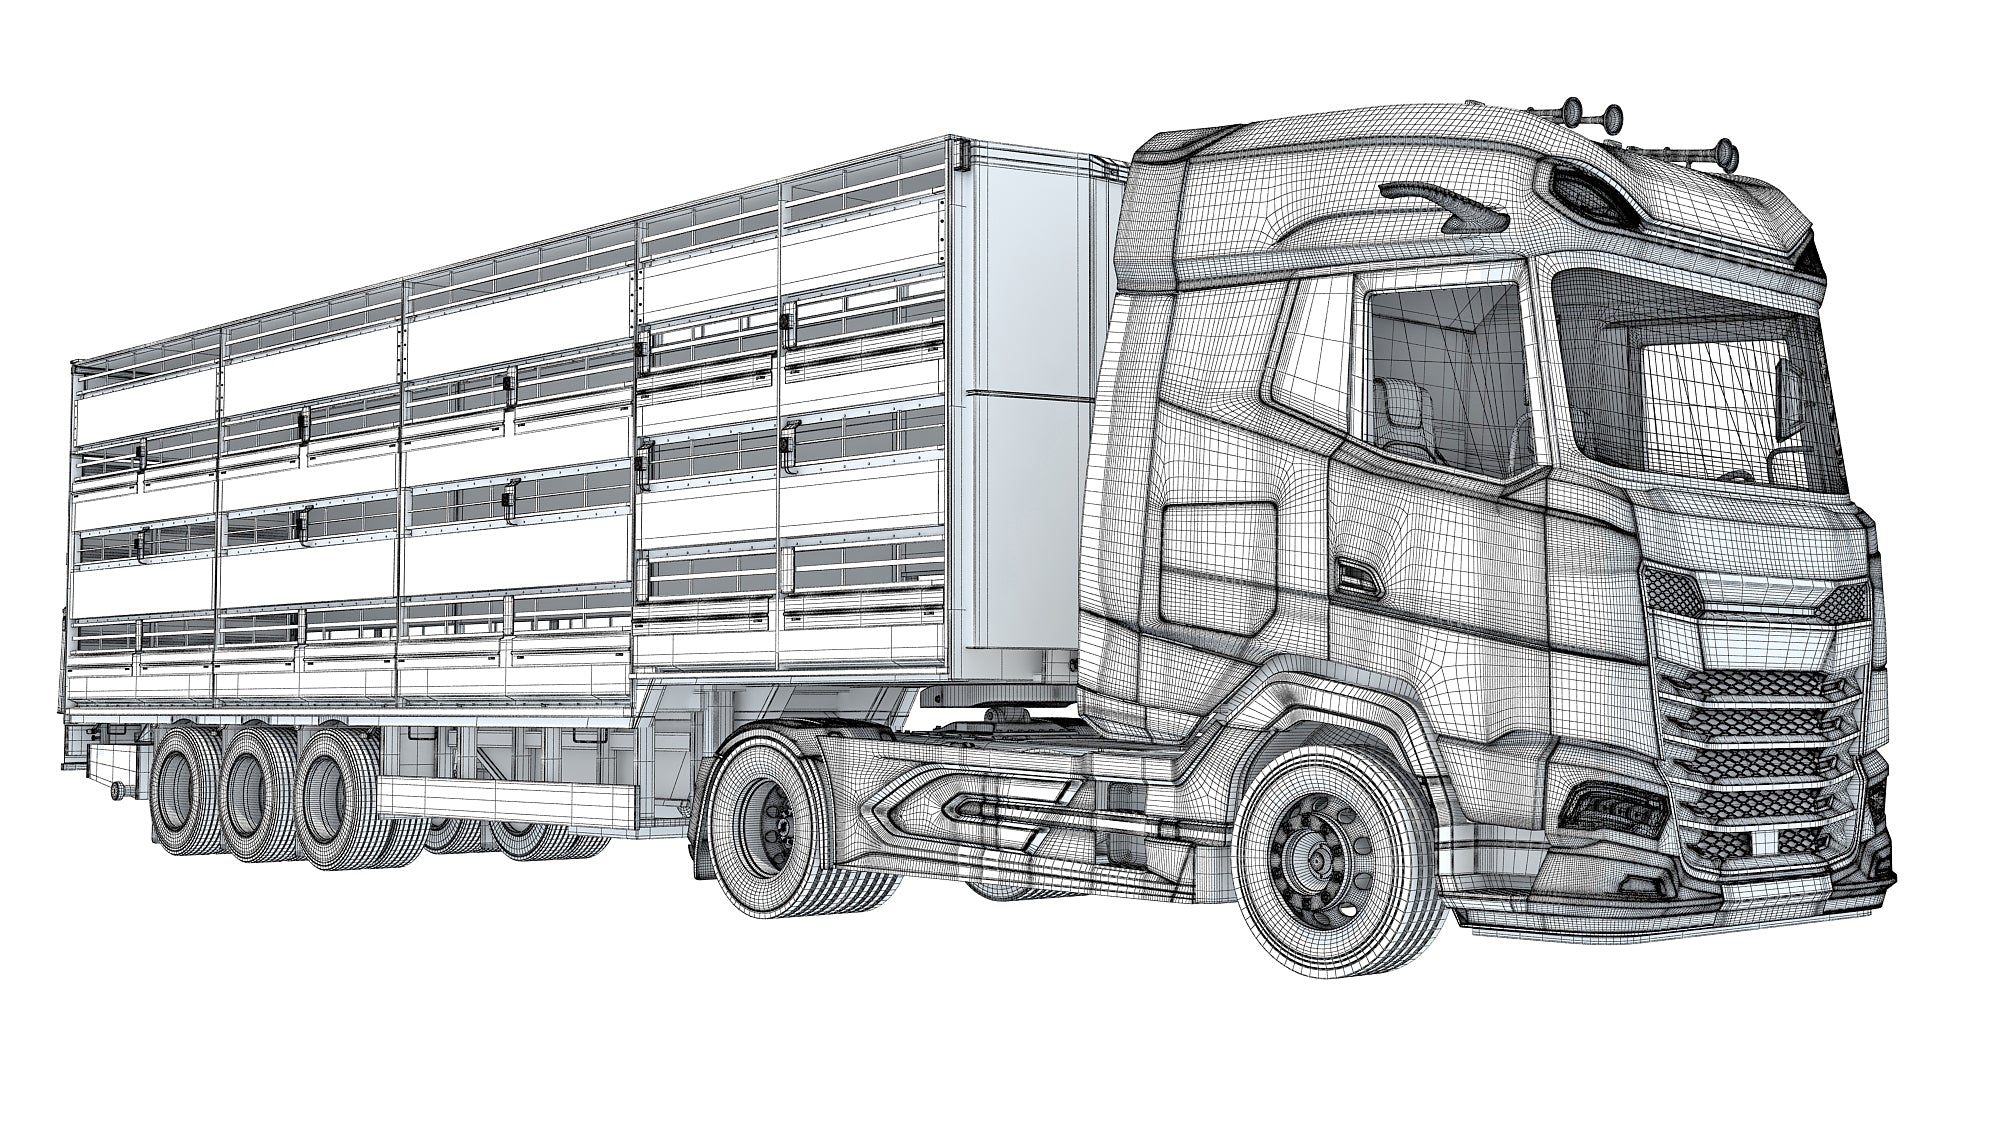 DAF XG Animal Transporter Truck